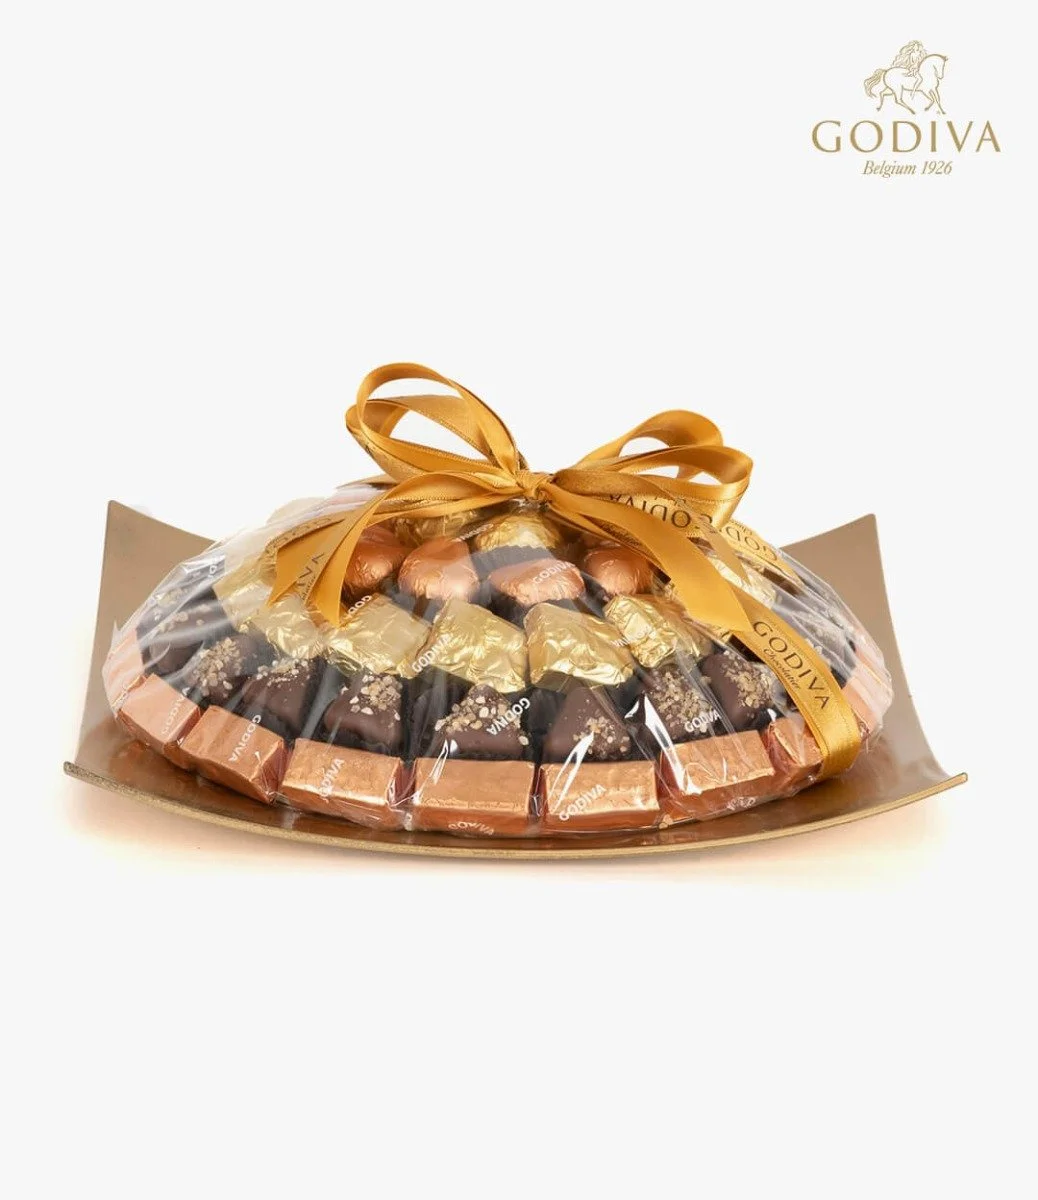 Golden Chocolate Tray by Godiva